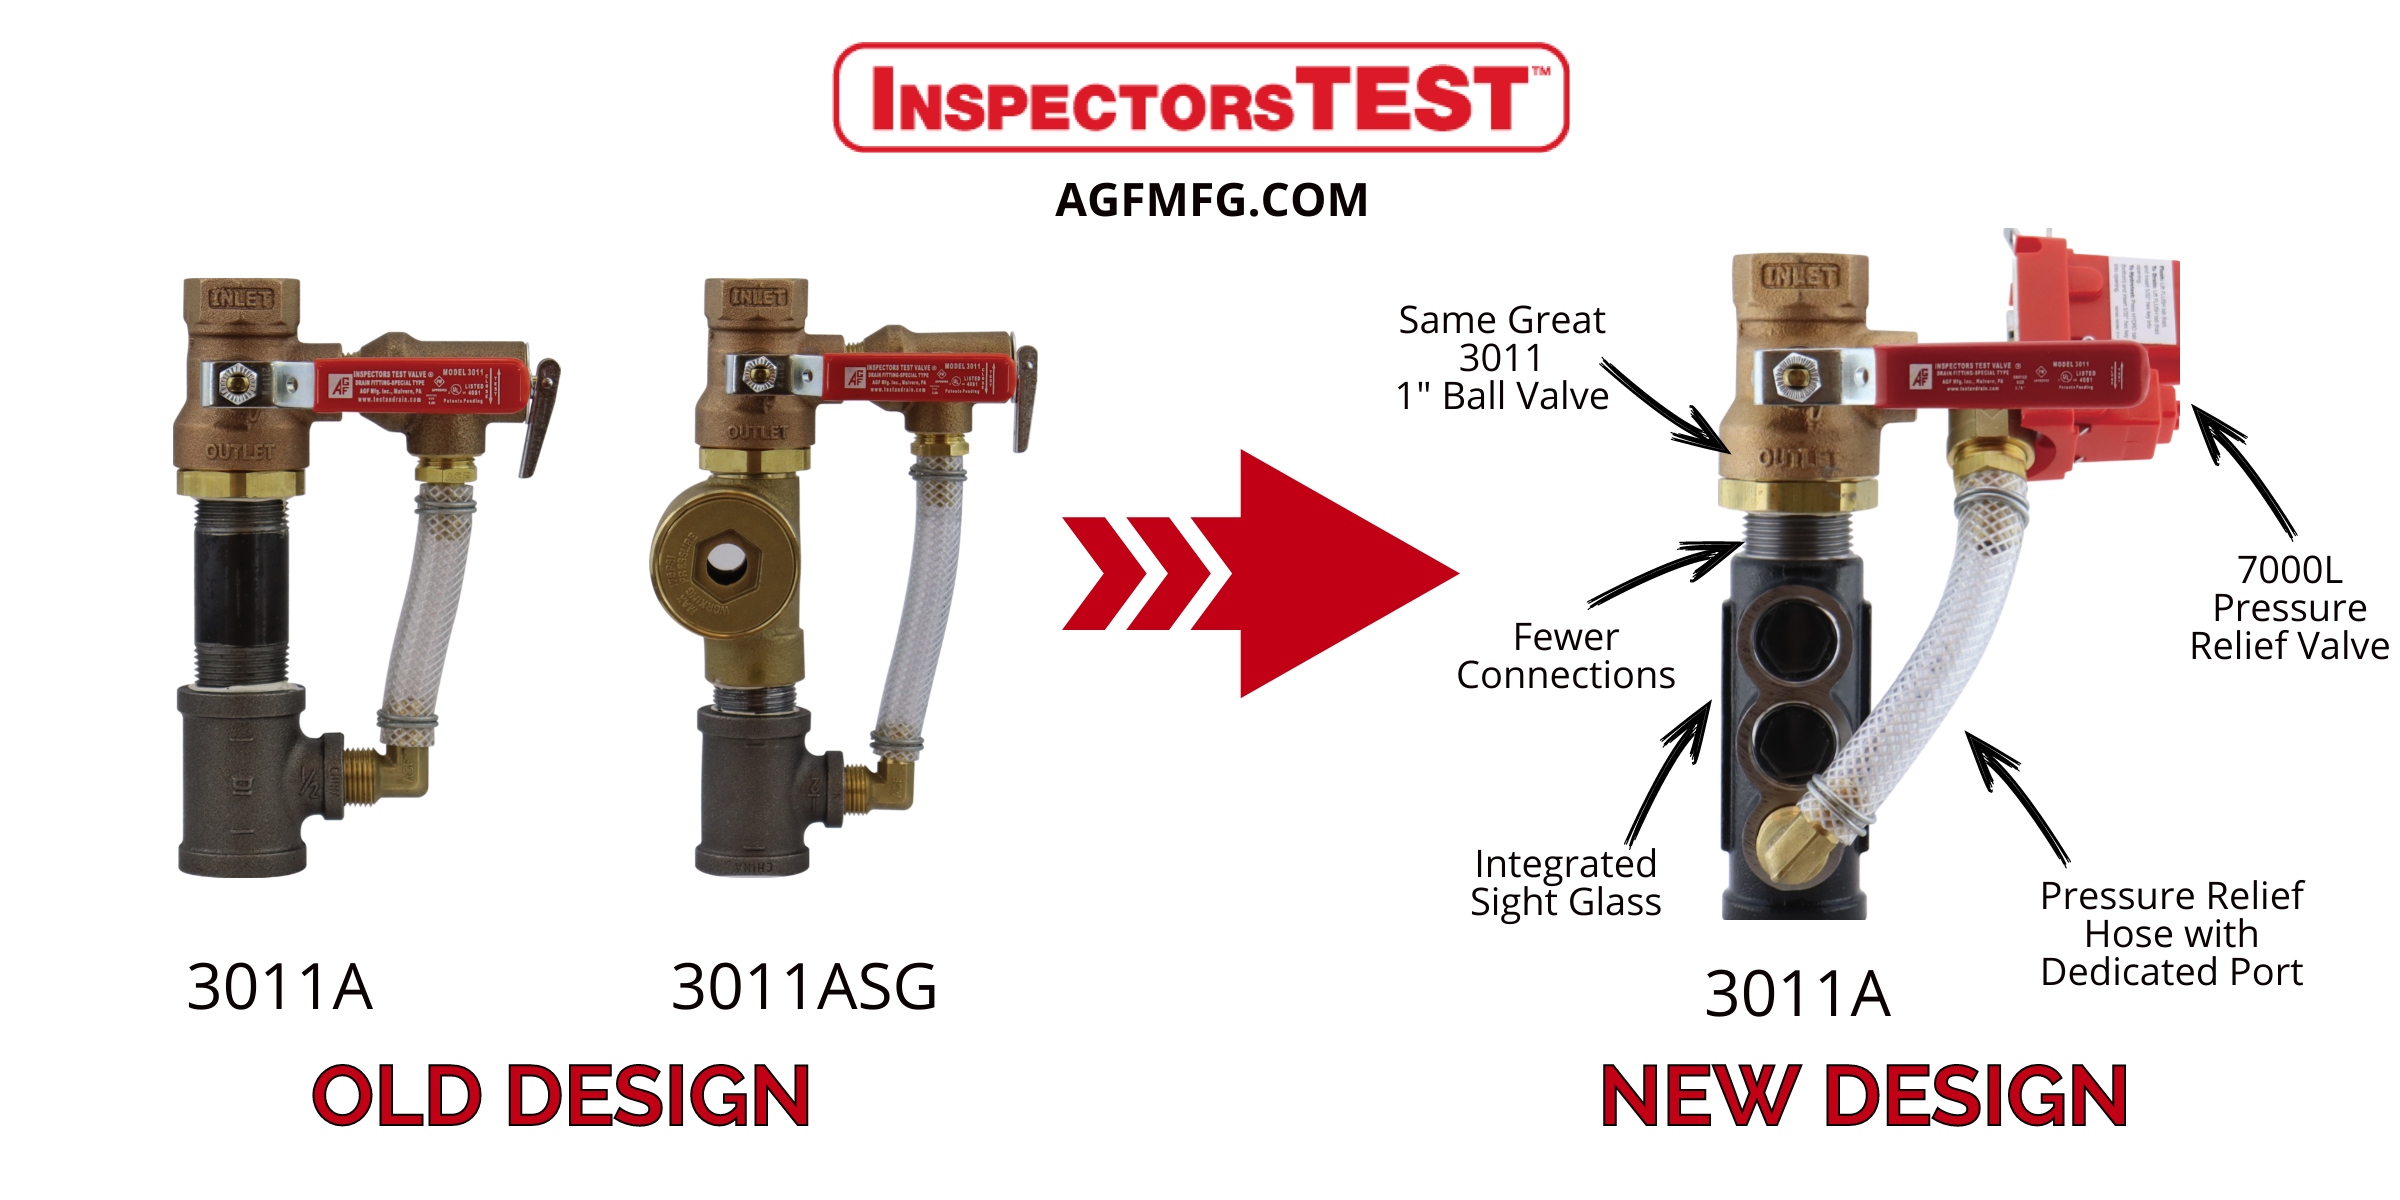 Inspector's Test fire sprinkler valve update